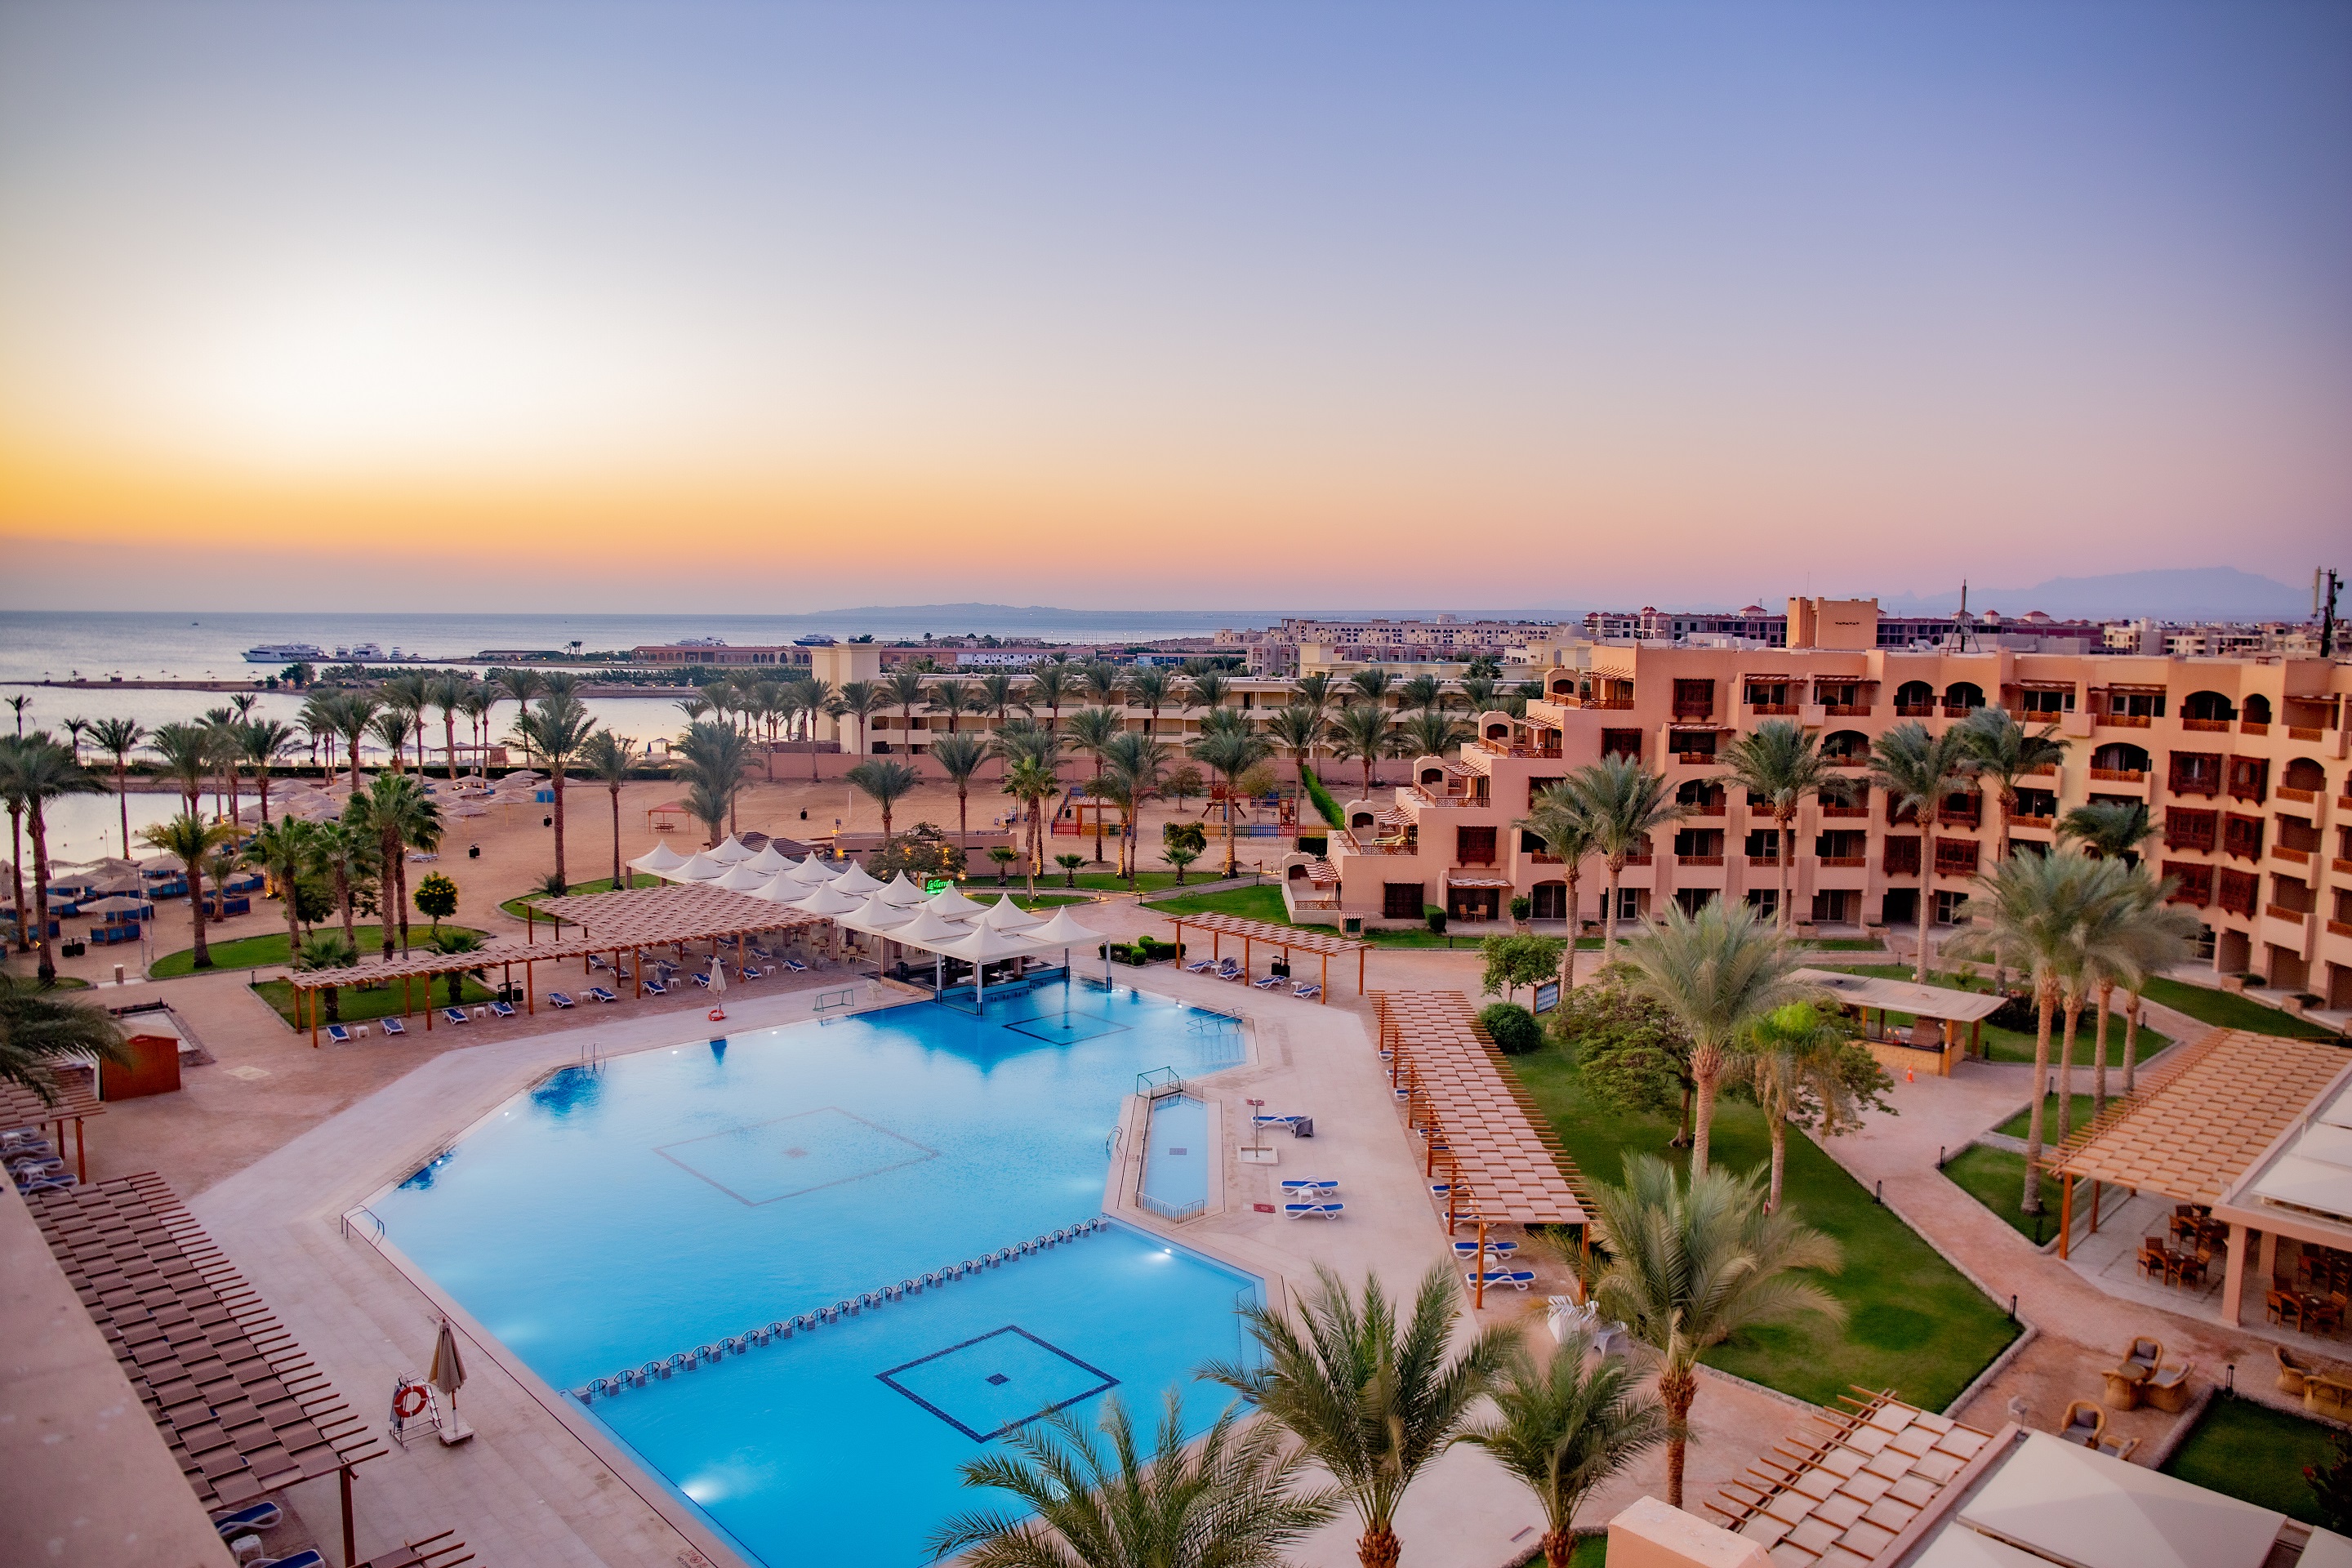 Continental Hotel Hurghada 5 Хургада. Отель Континенталь Египет. Хургада отель Мухафаза. Египет море Пегас.